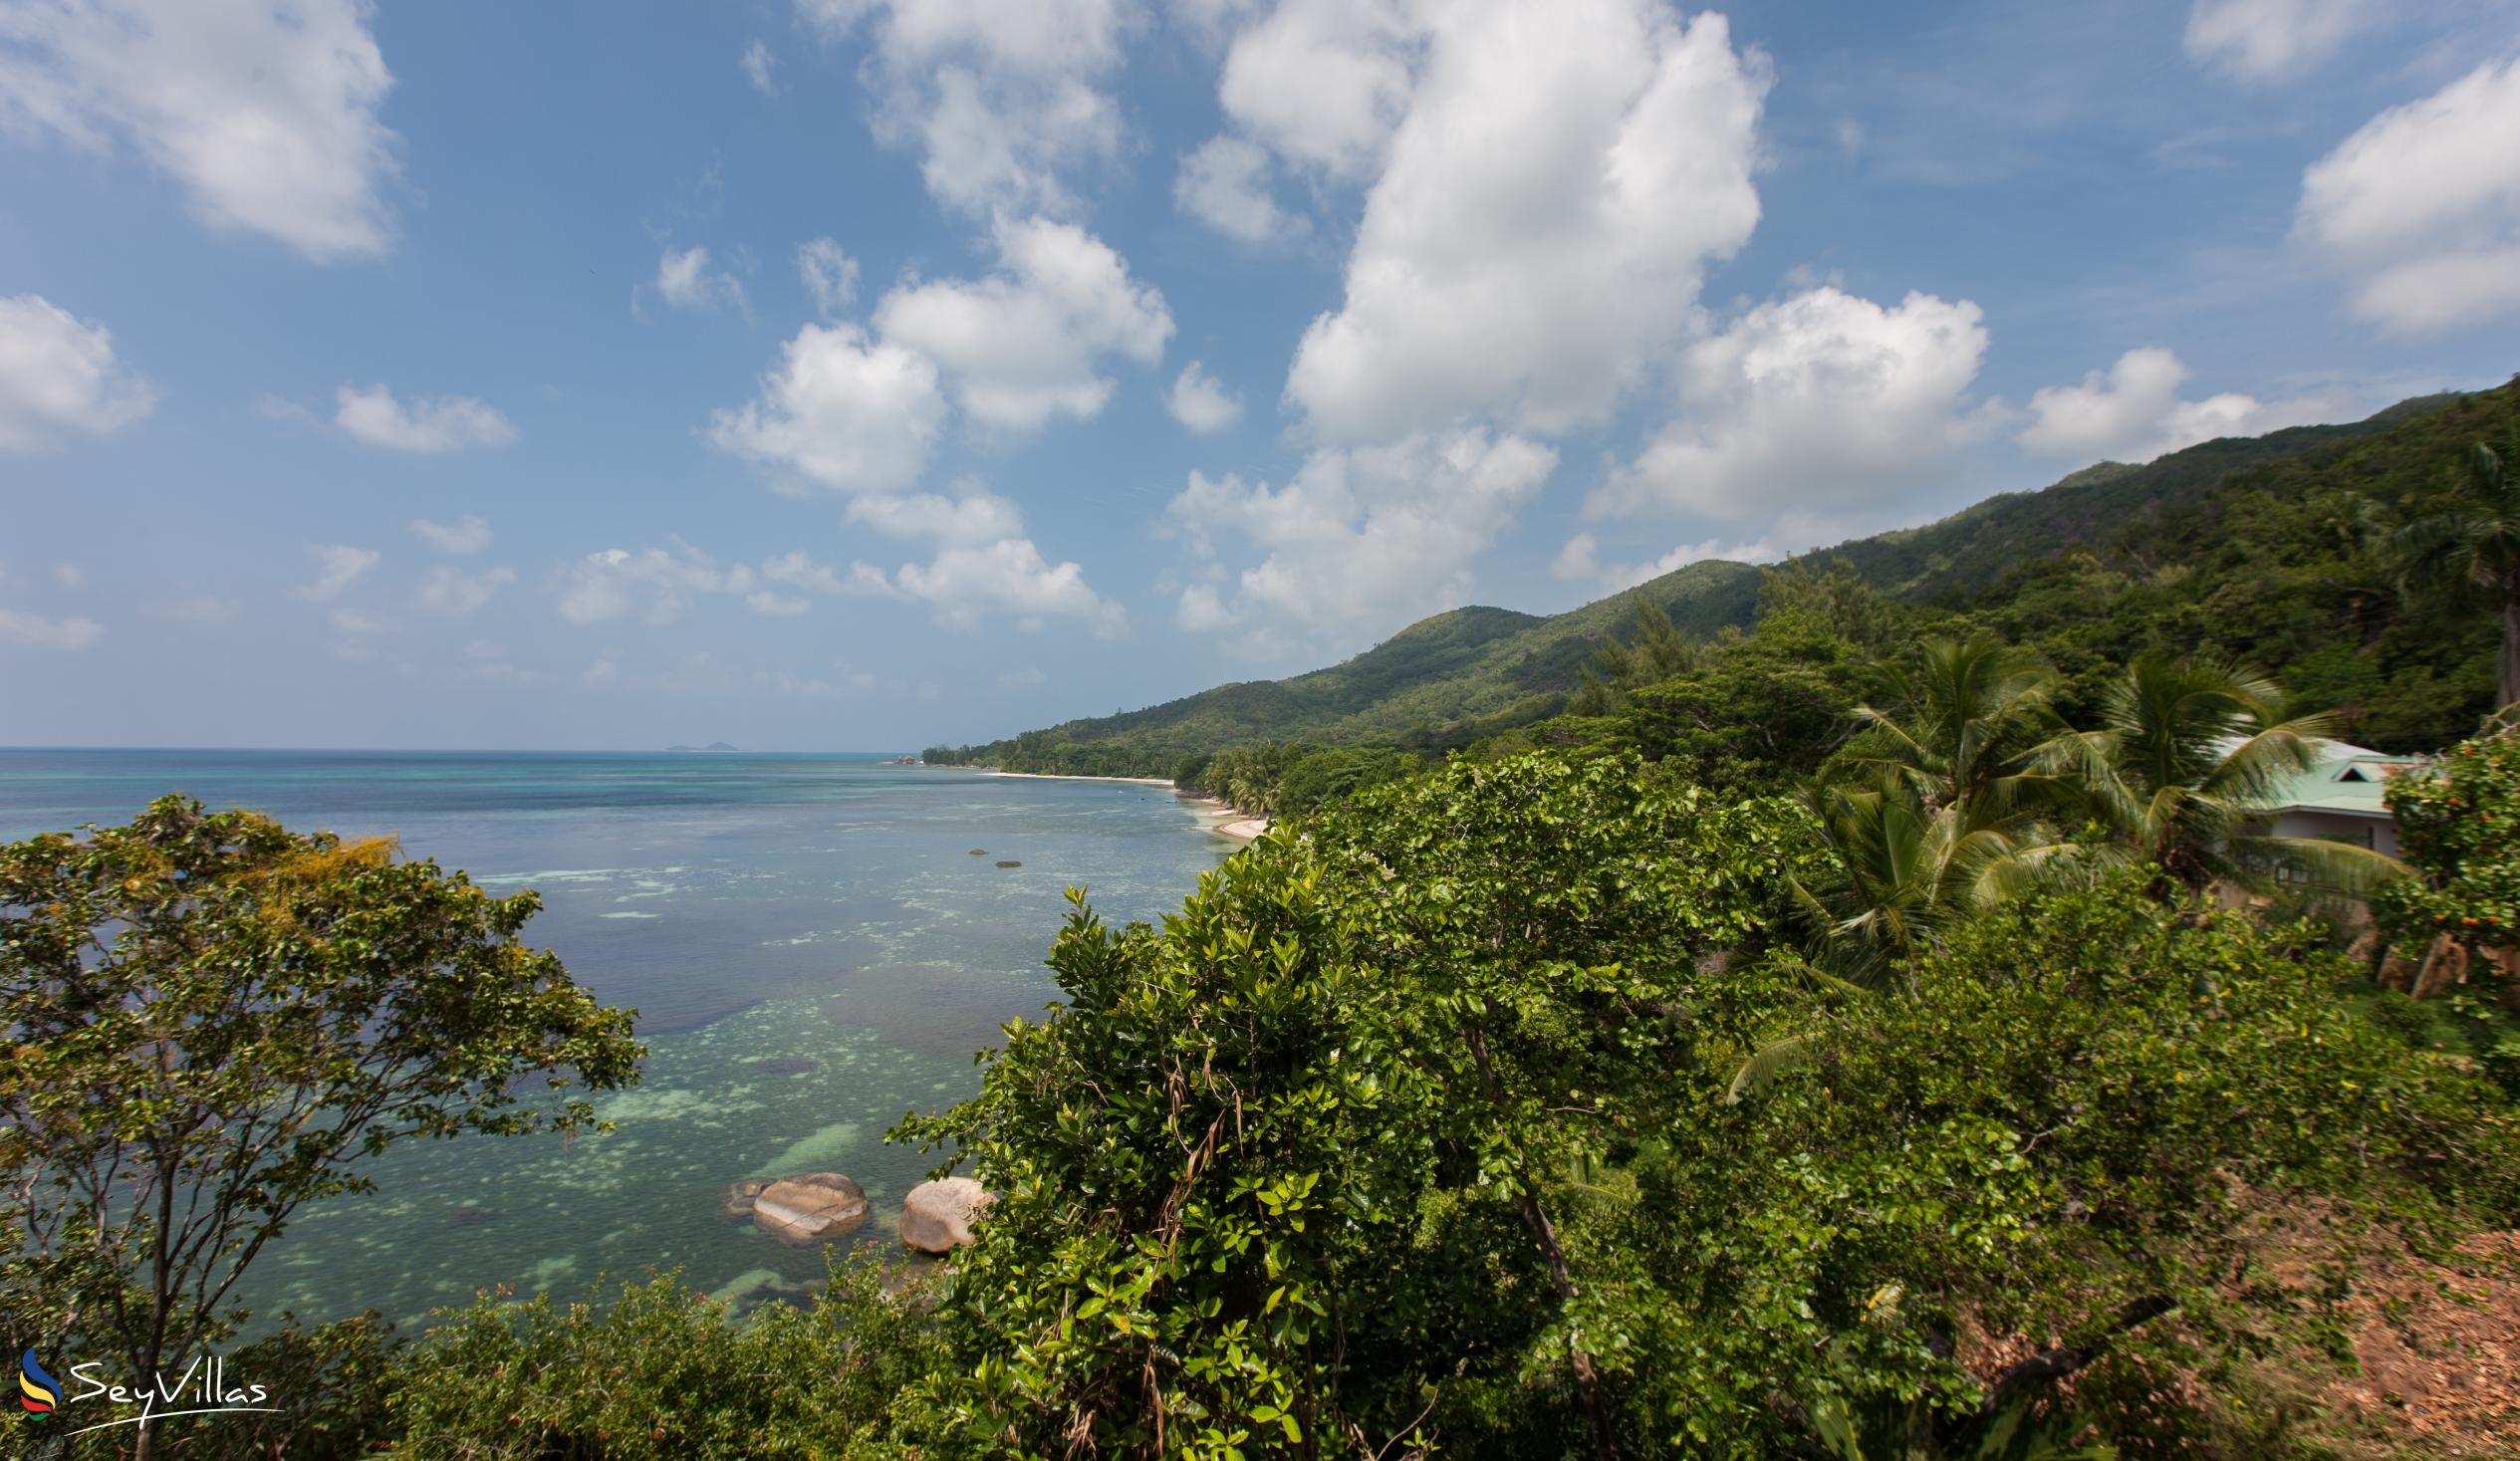 Foto 48: Coco de Mer & Black Parrot Suites - Posizione - Praslin (Seychelles)